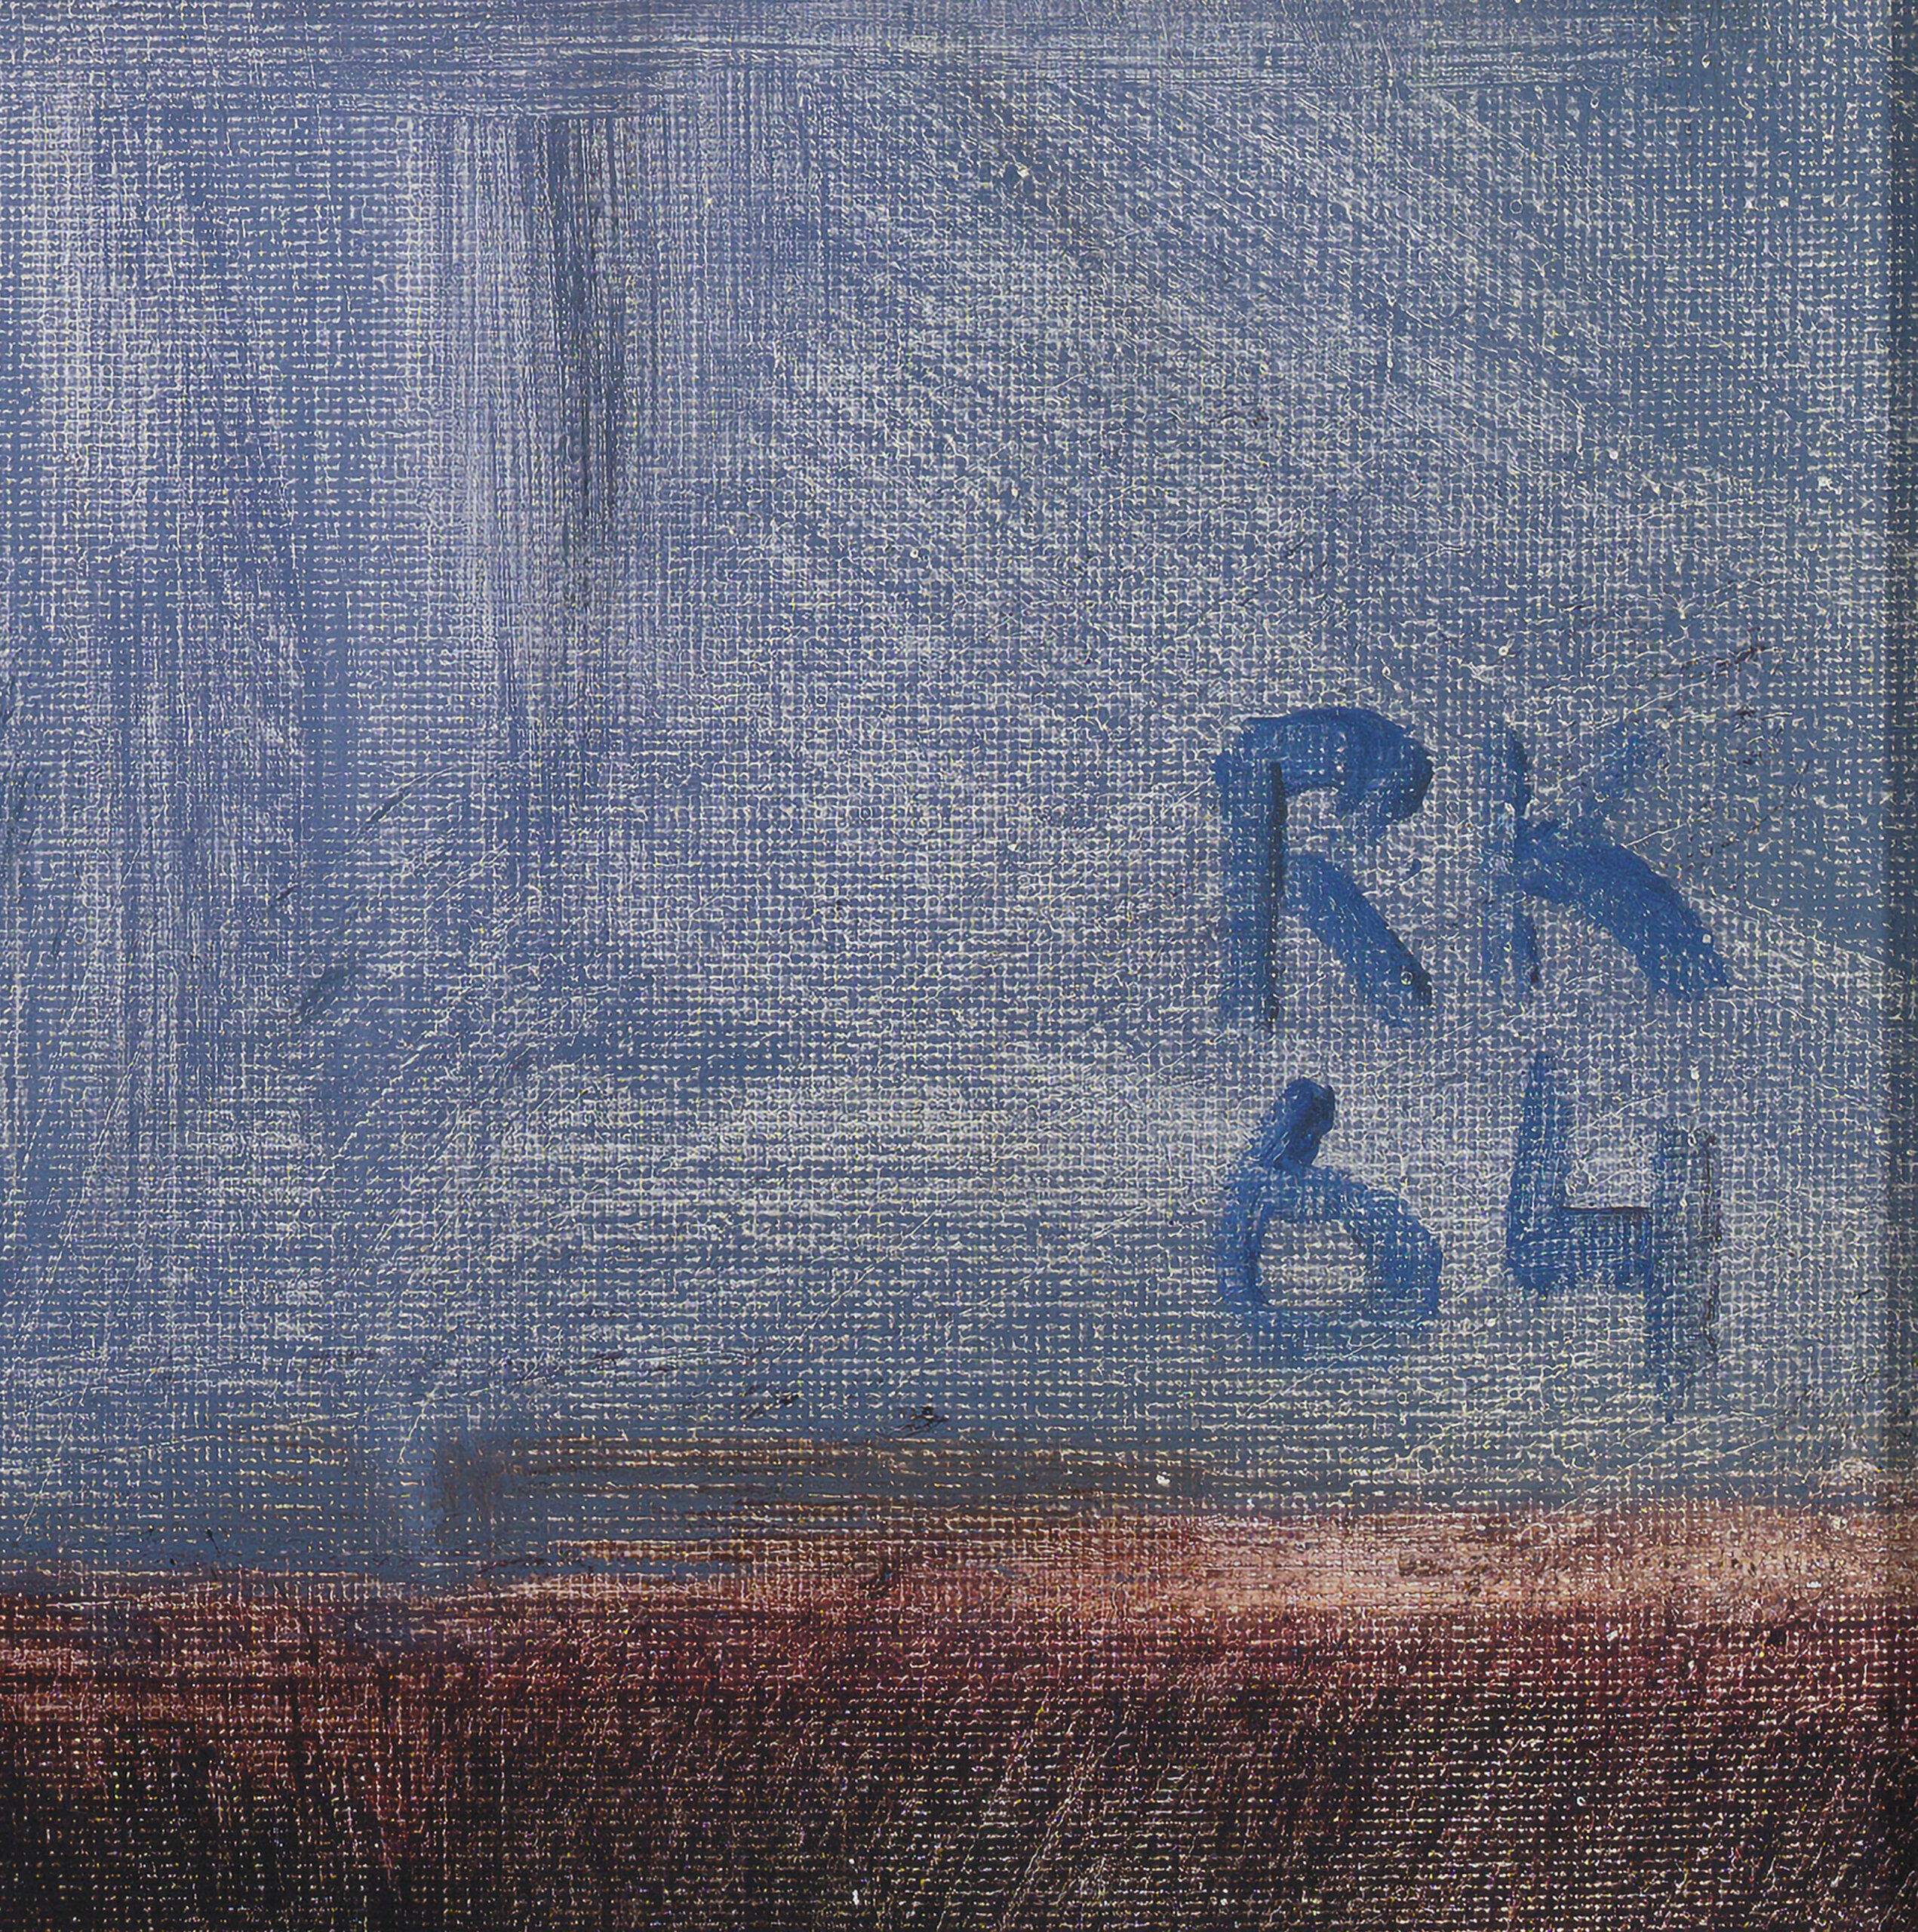 Raivo Korstnik “Akt sinise maja taustal”, 1964. 49,5 x 35,2 cm.